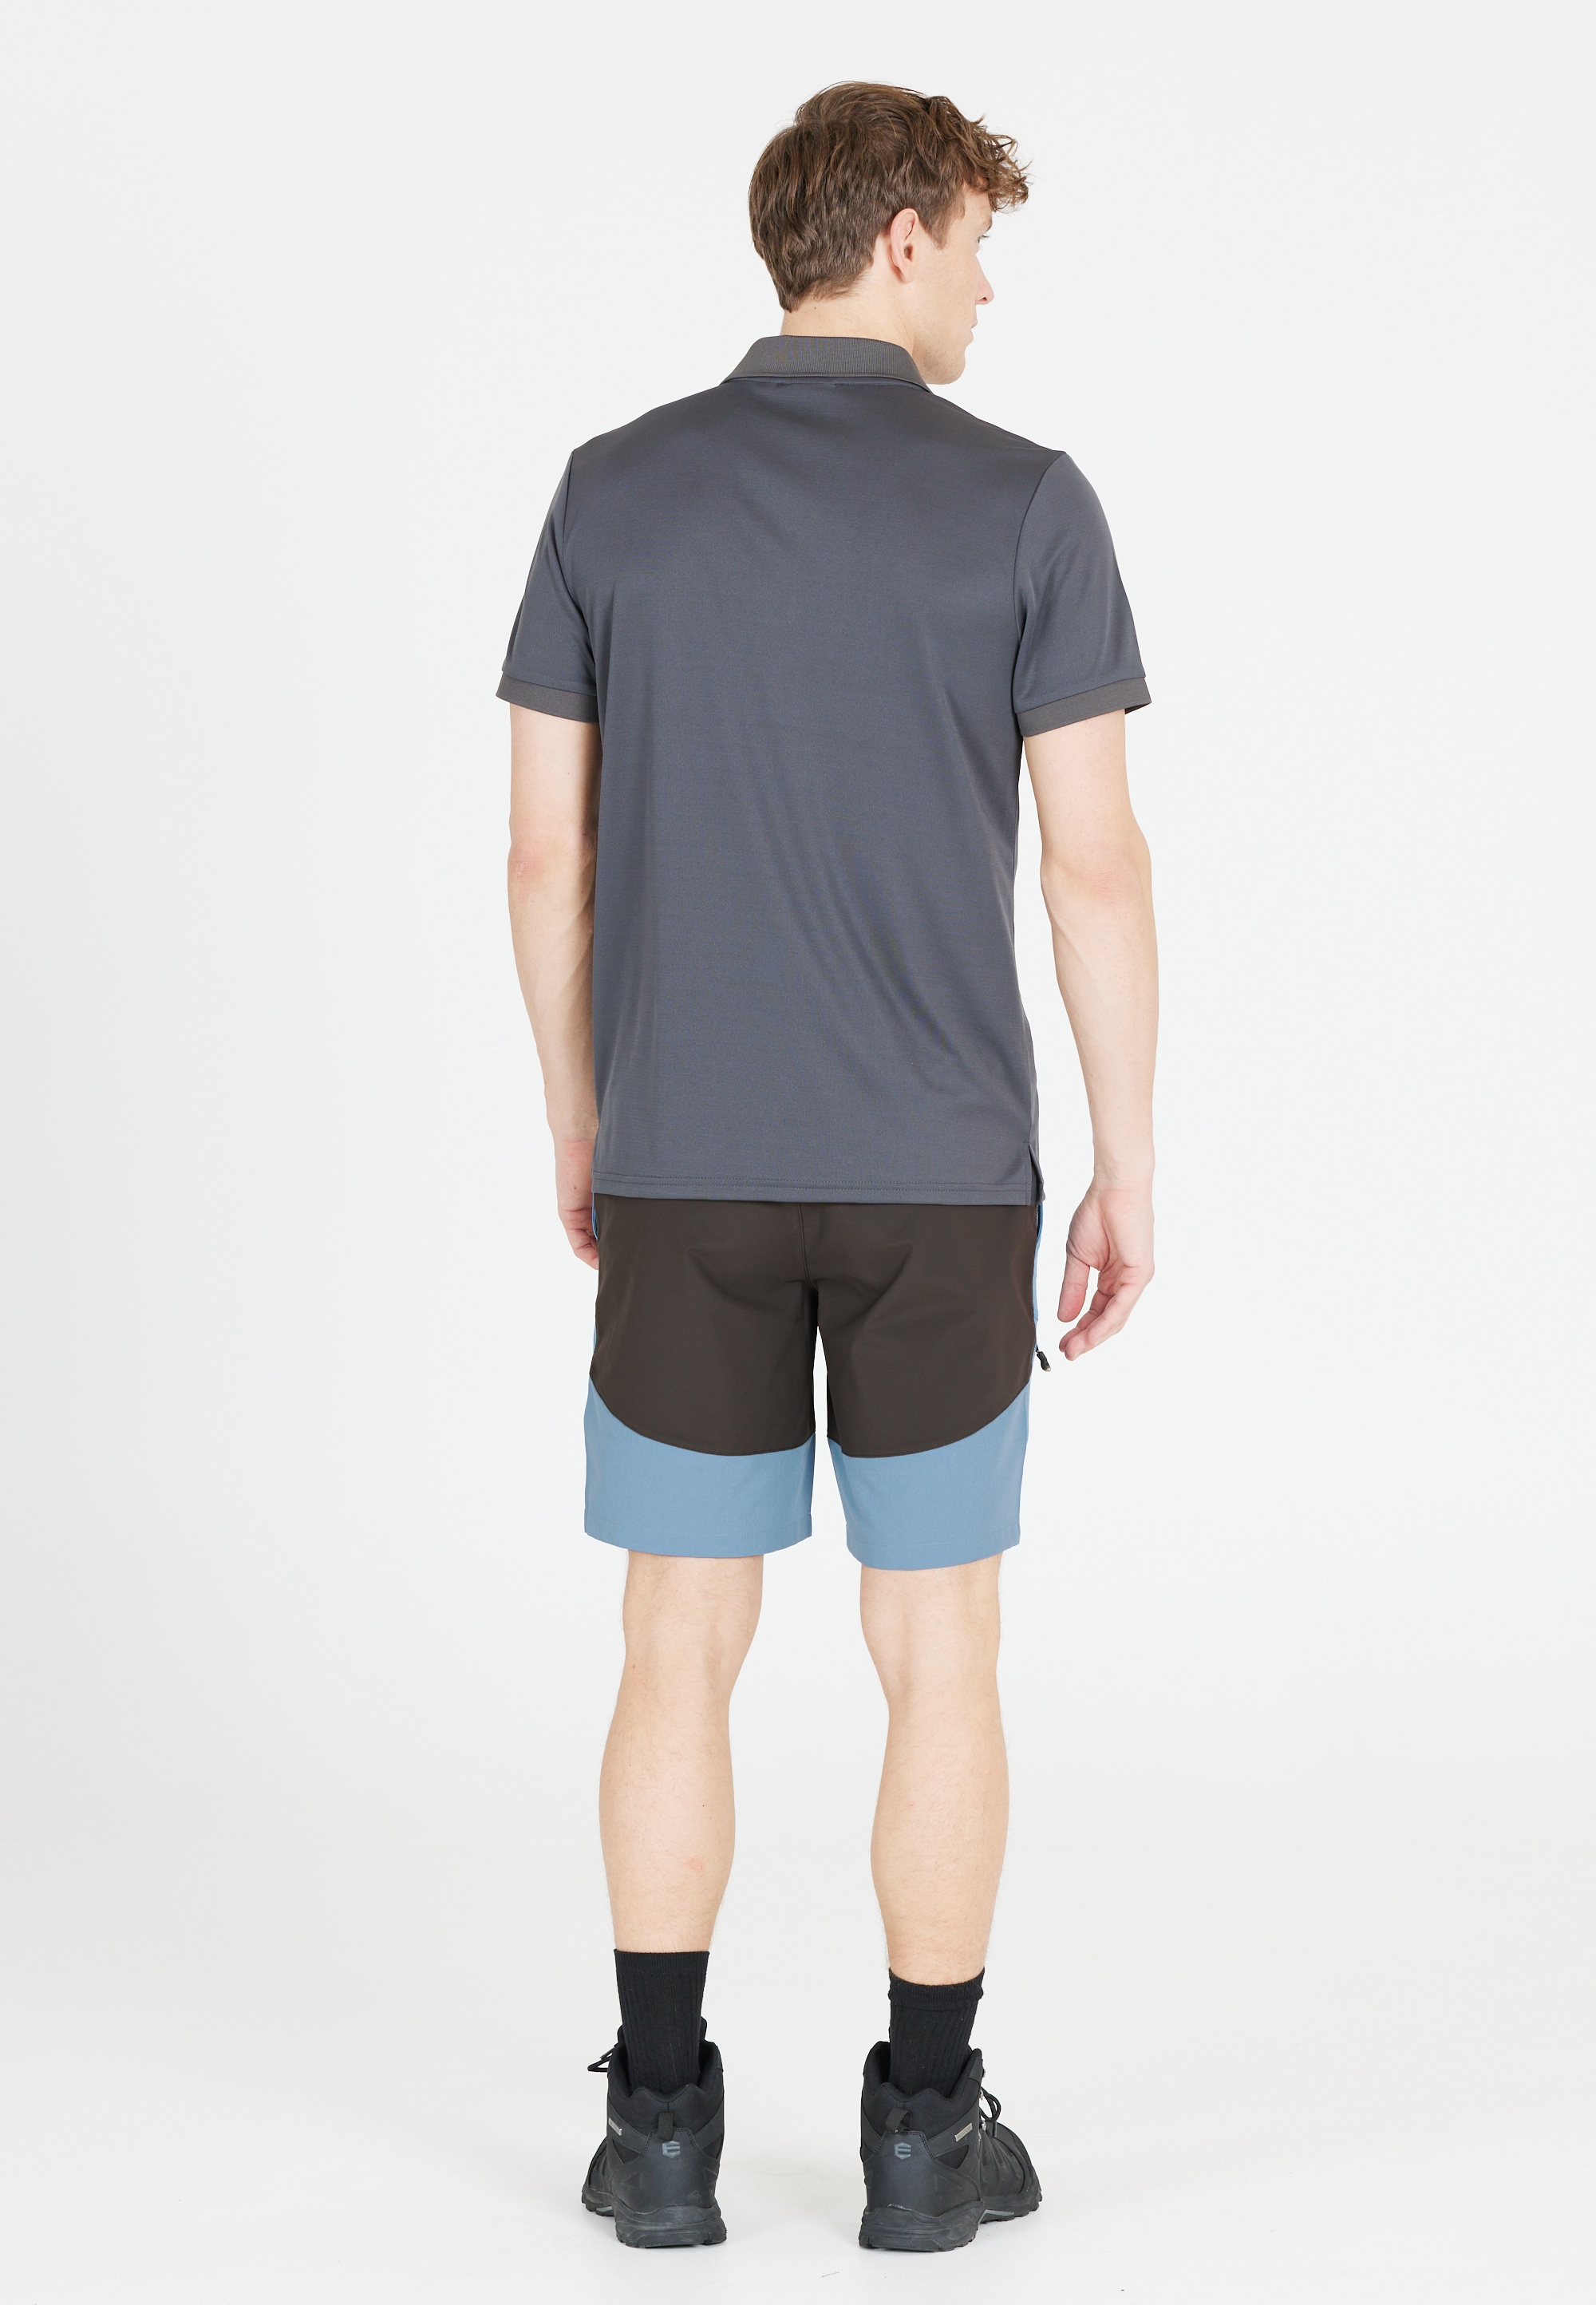 WHISTLER Shorts, mit 4-Wege-Stretch-Material